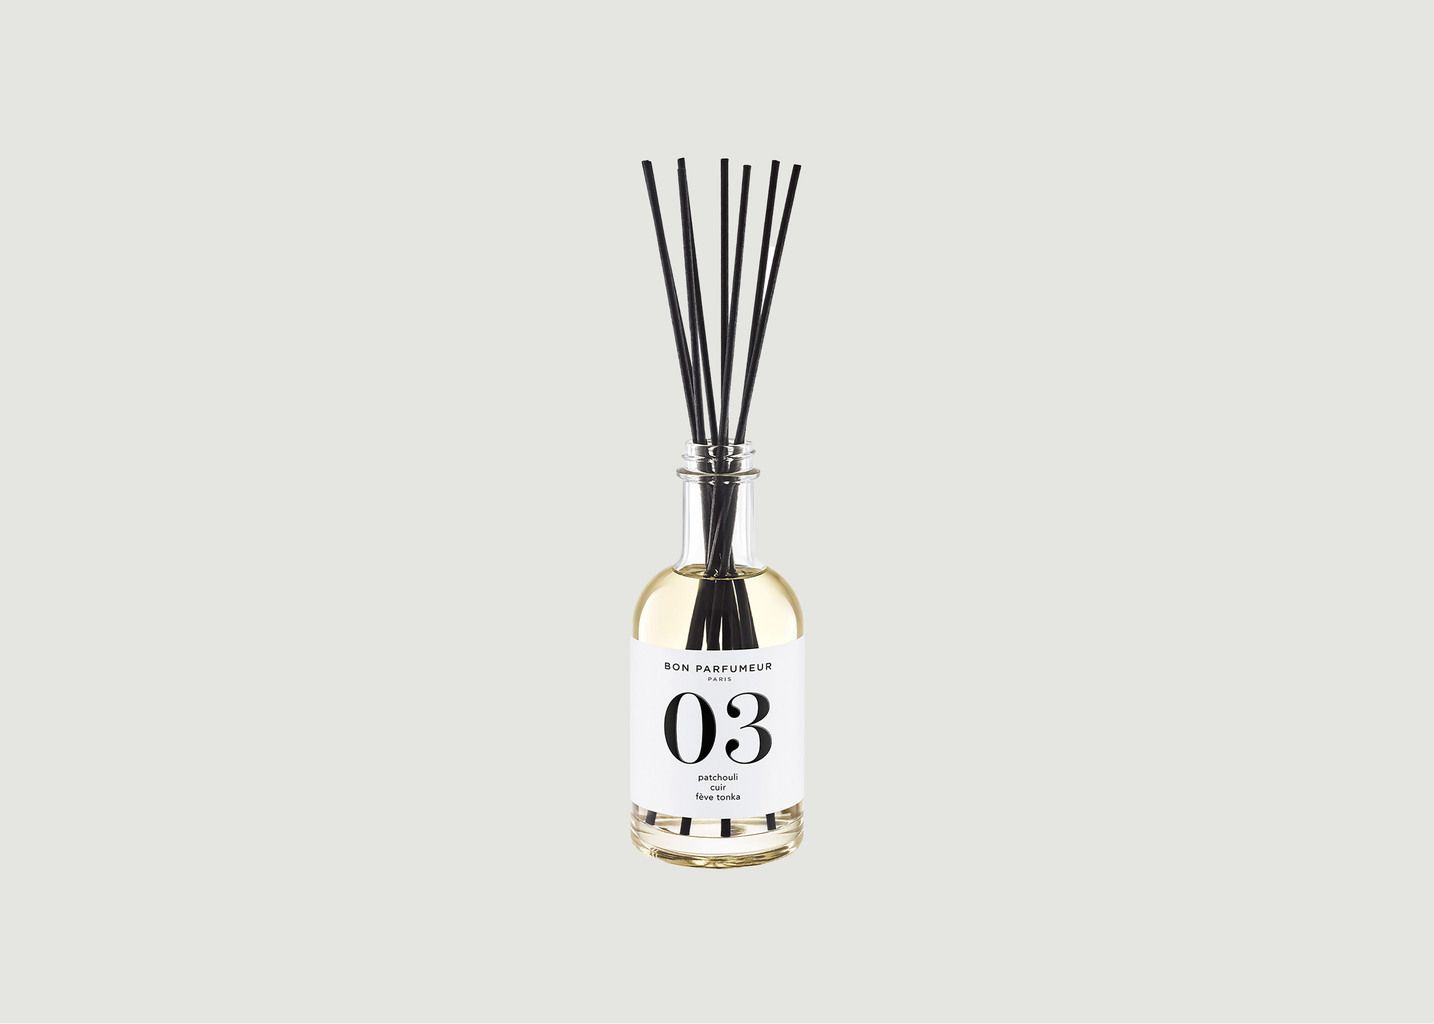 Home Fragrance Diffuser 03: Patchouli, Leather, Tonka Bean - Bon Parfumeur